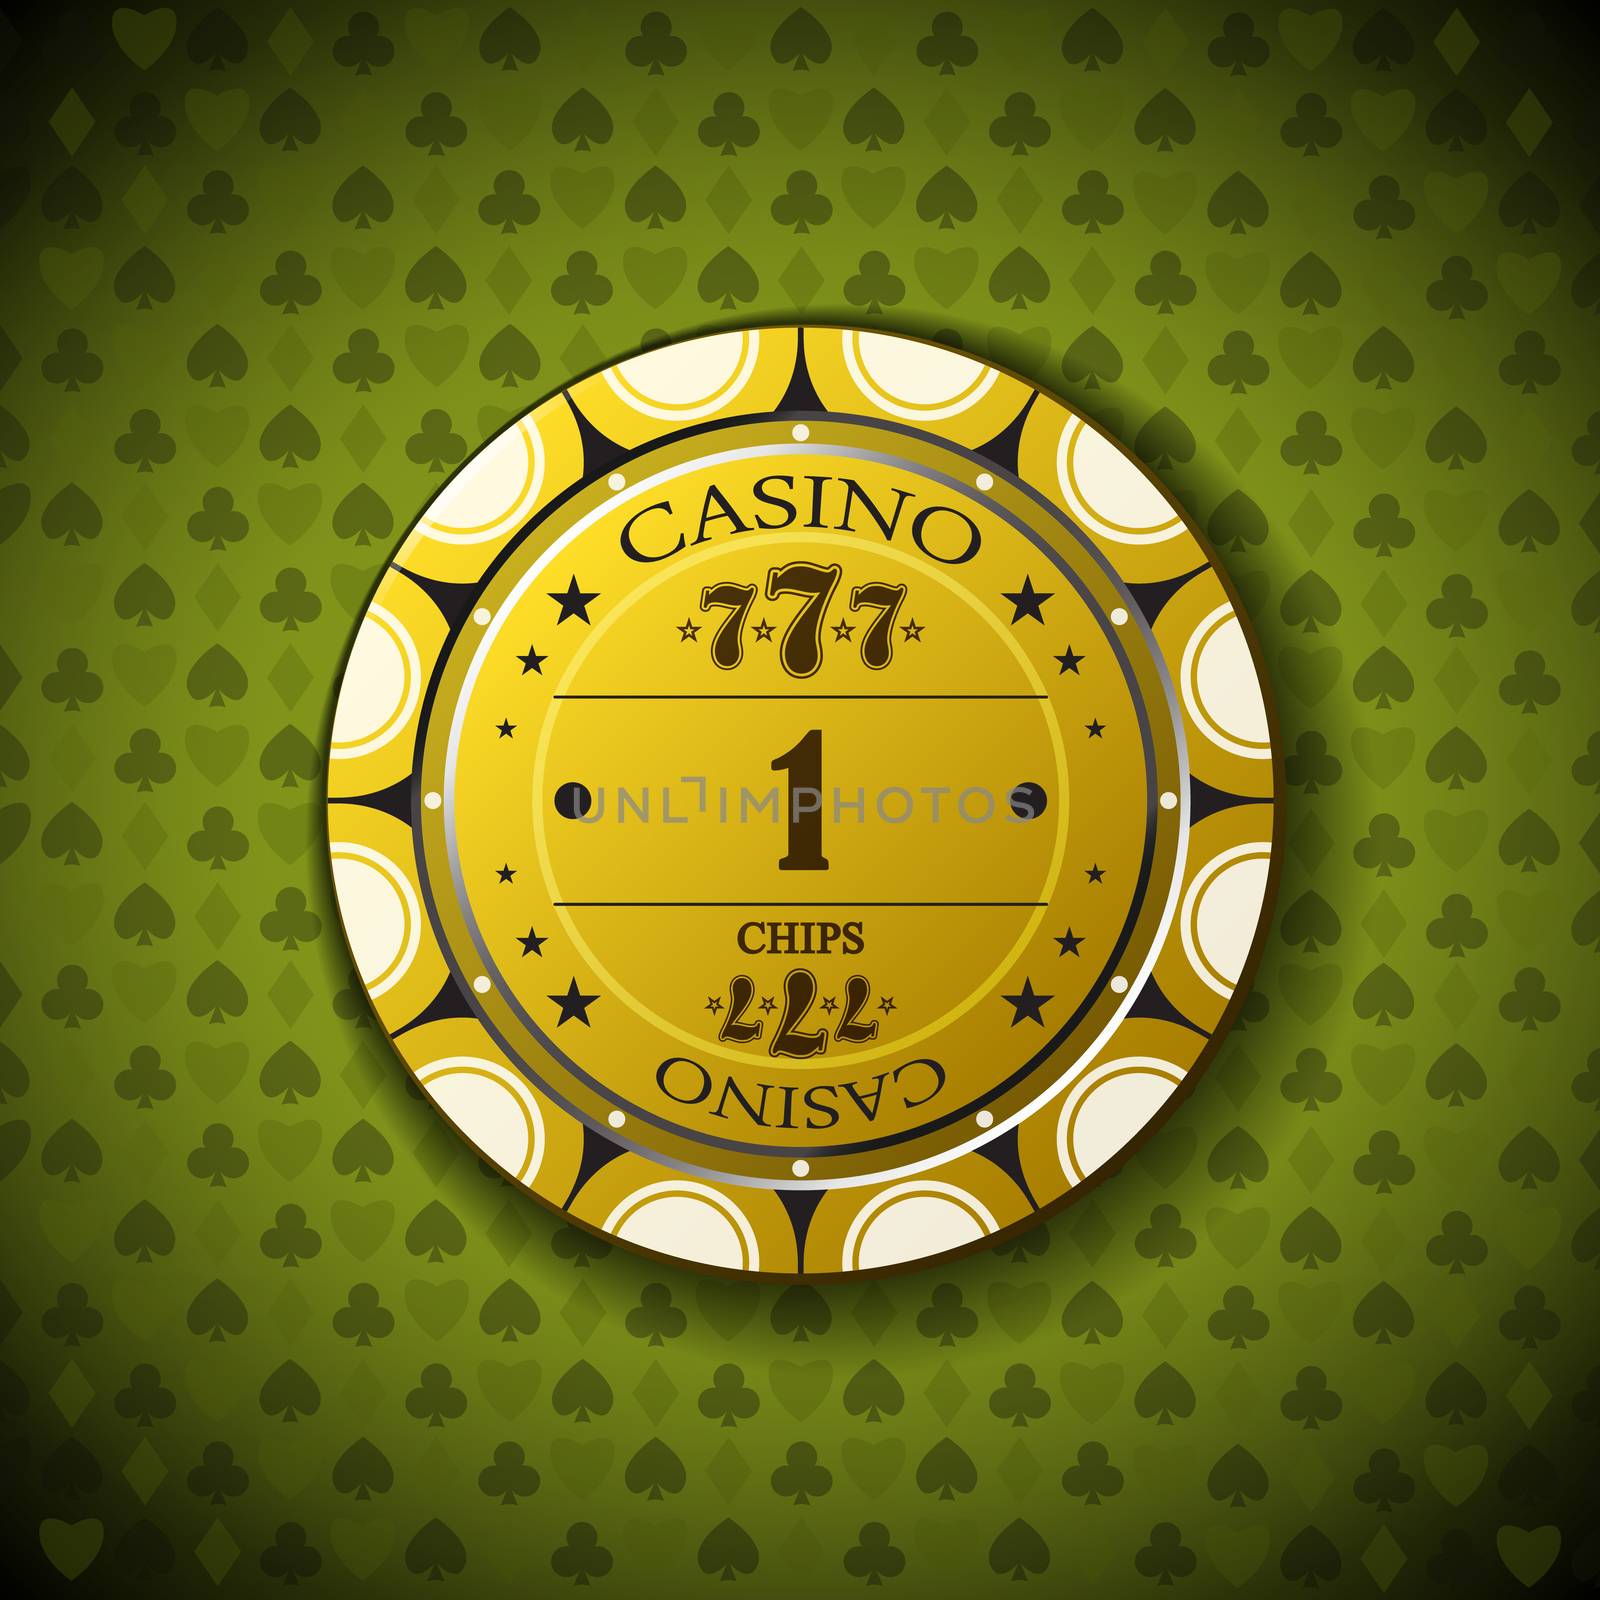 Poker chip nominal one, on card symbol background.